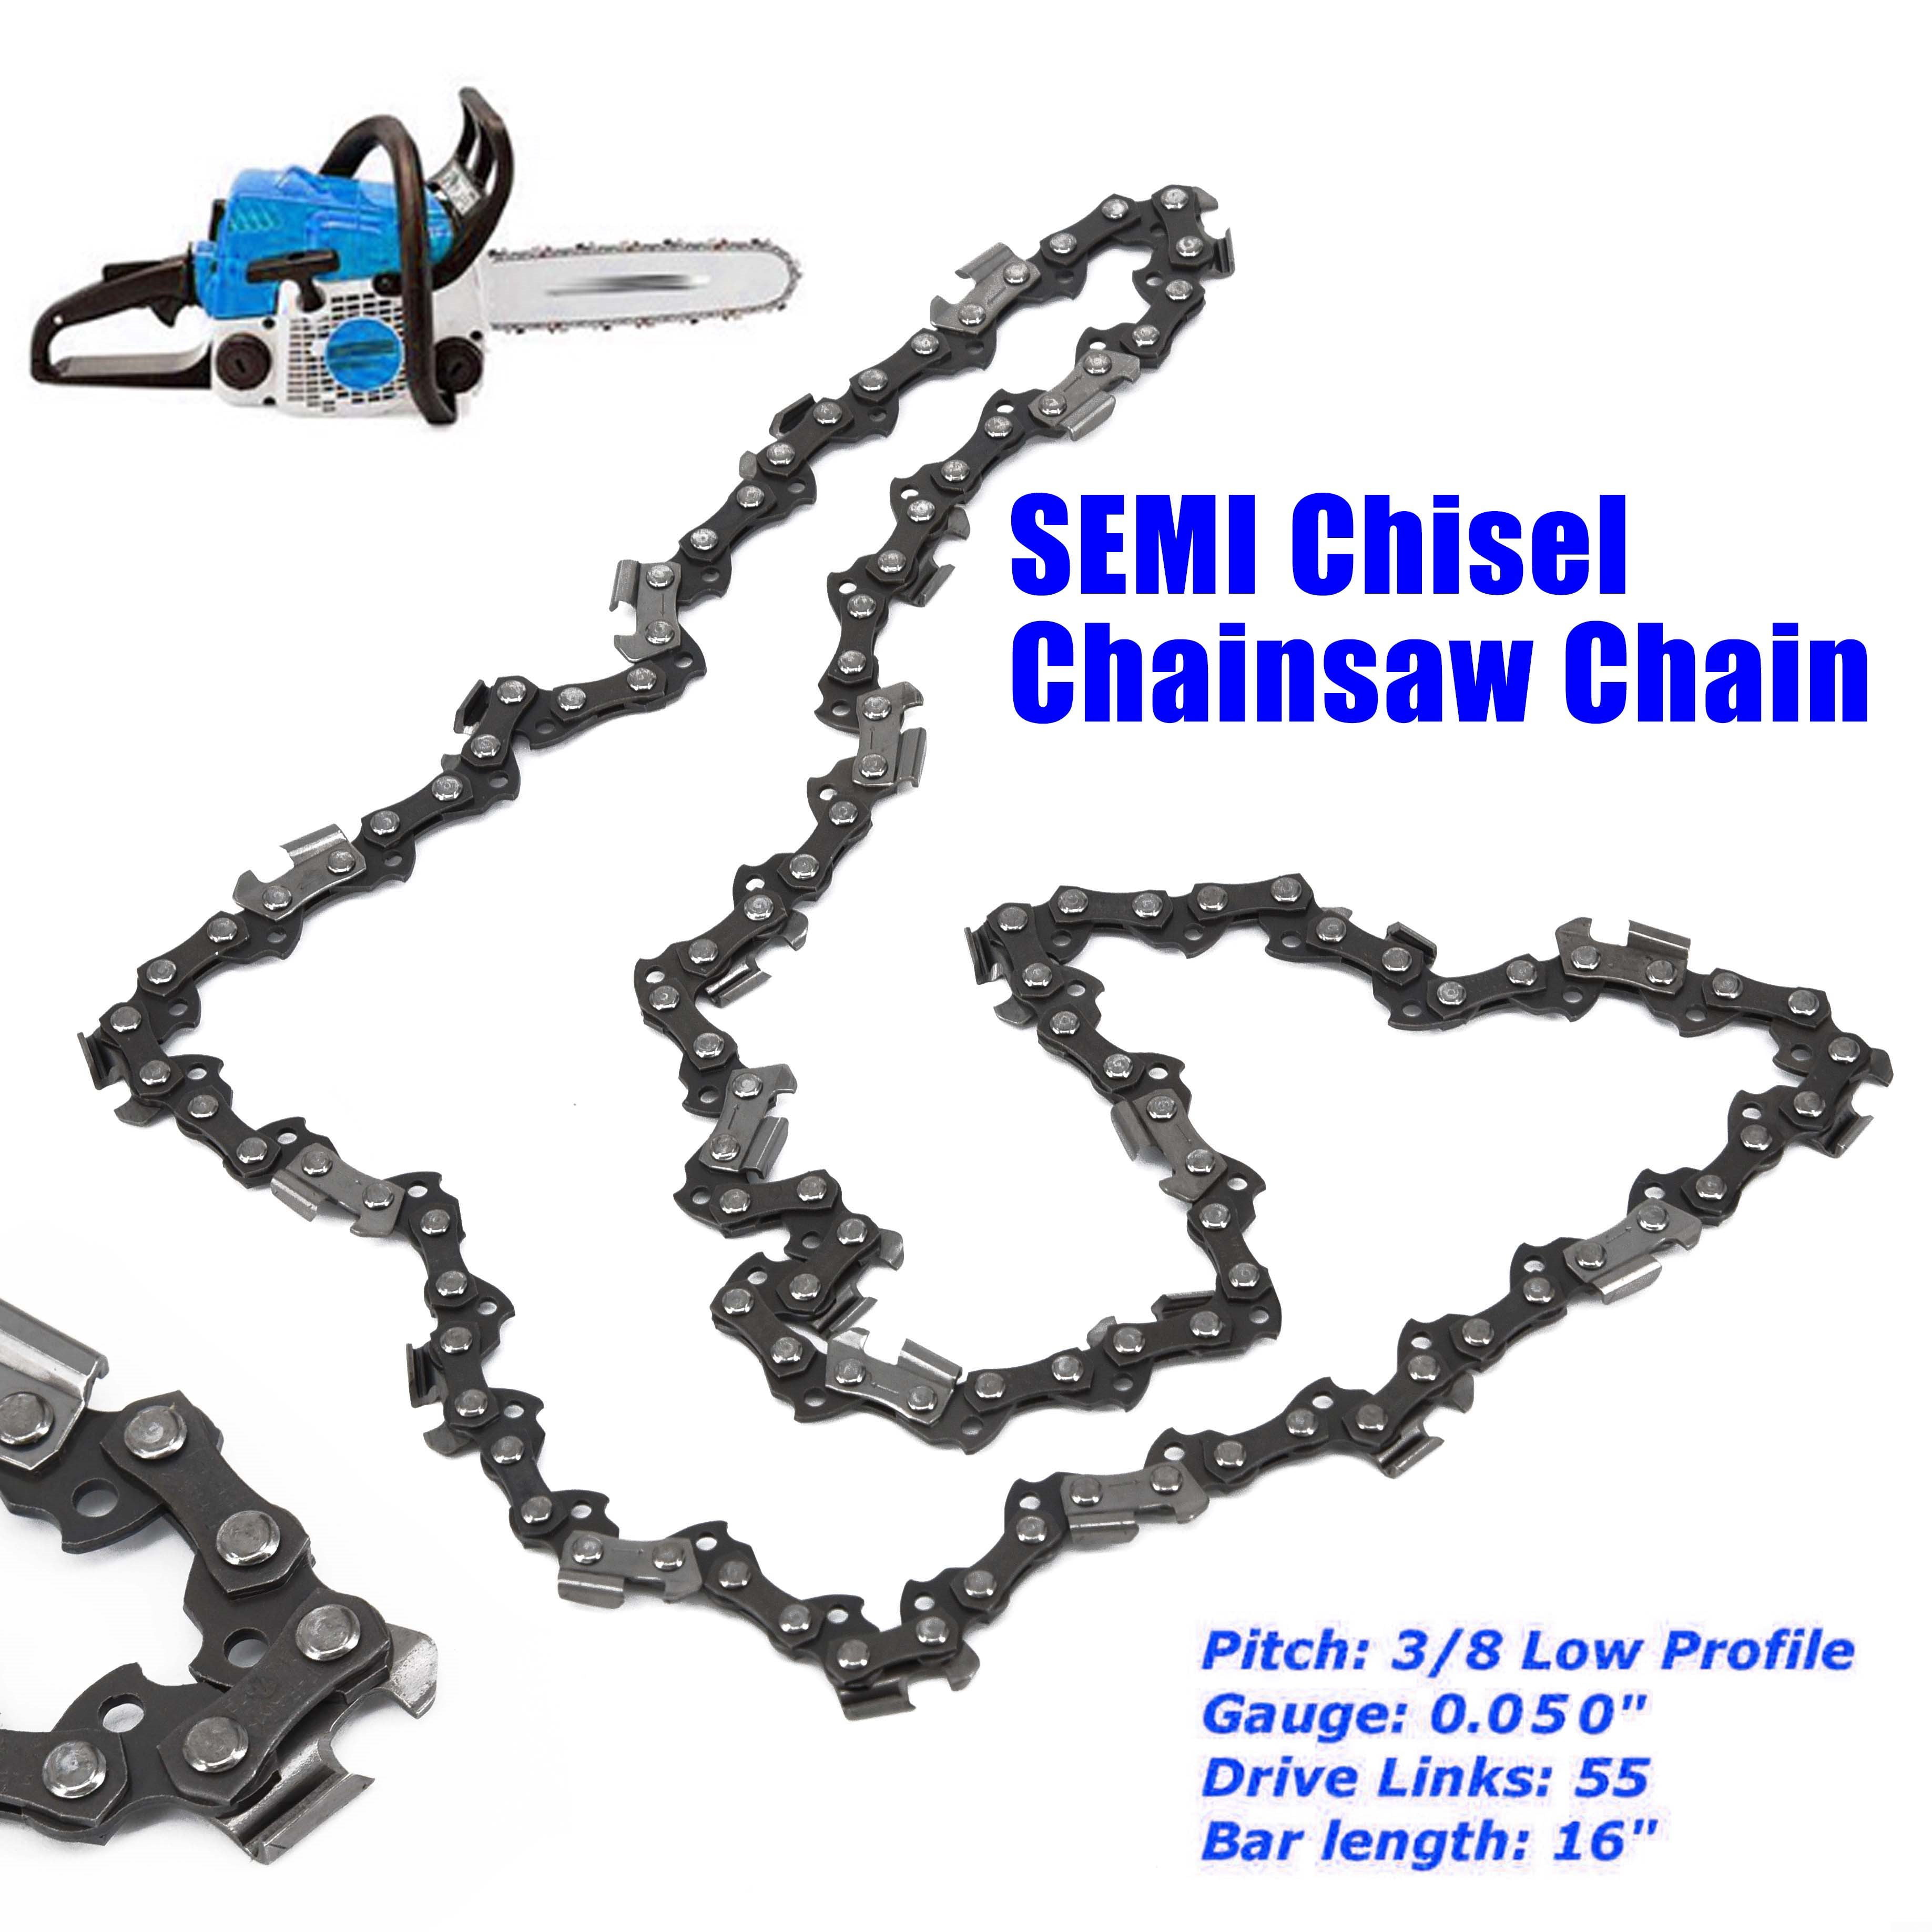 16" Chainsaw Chain fits Stihl Chainsaw 3/8 LP .050 Gauge 55 DL SEMI CHISEL US 